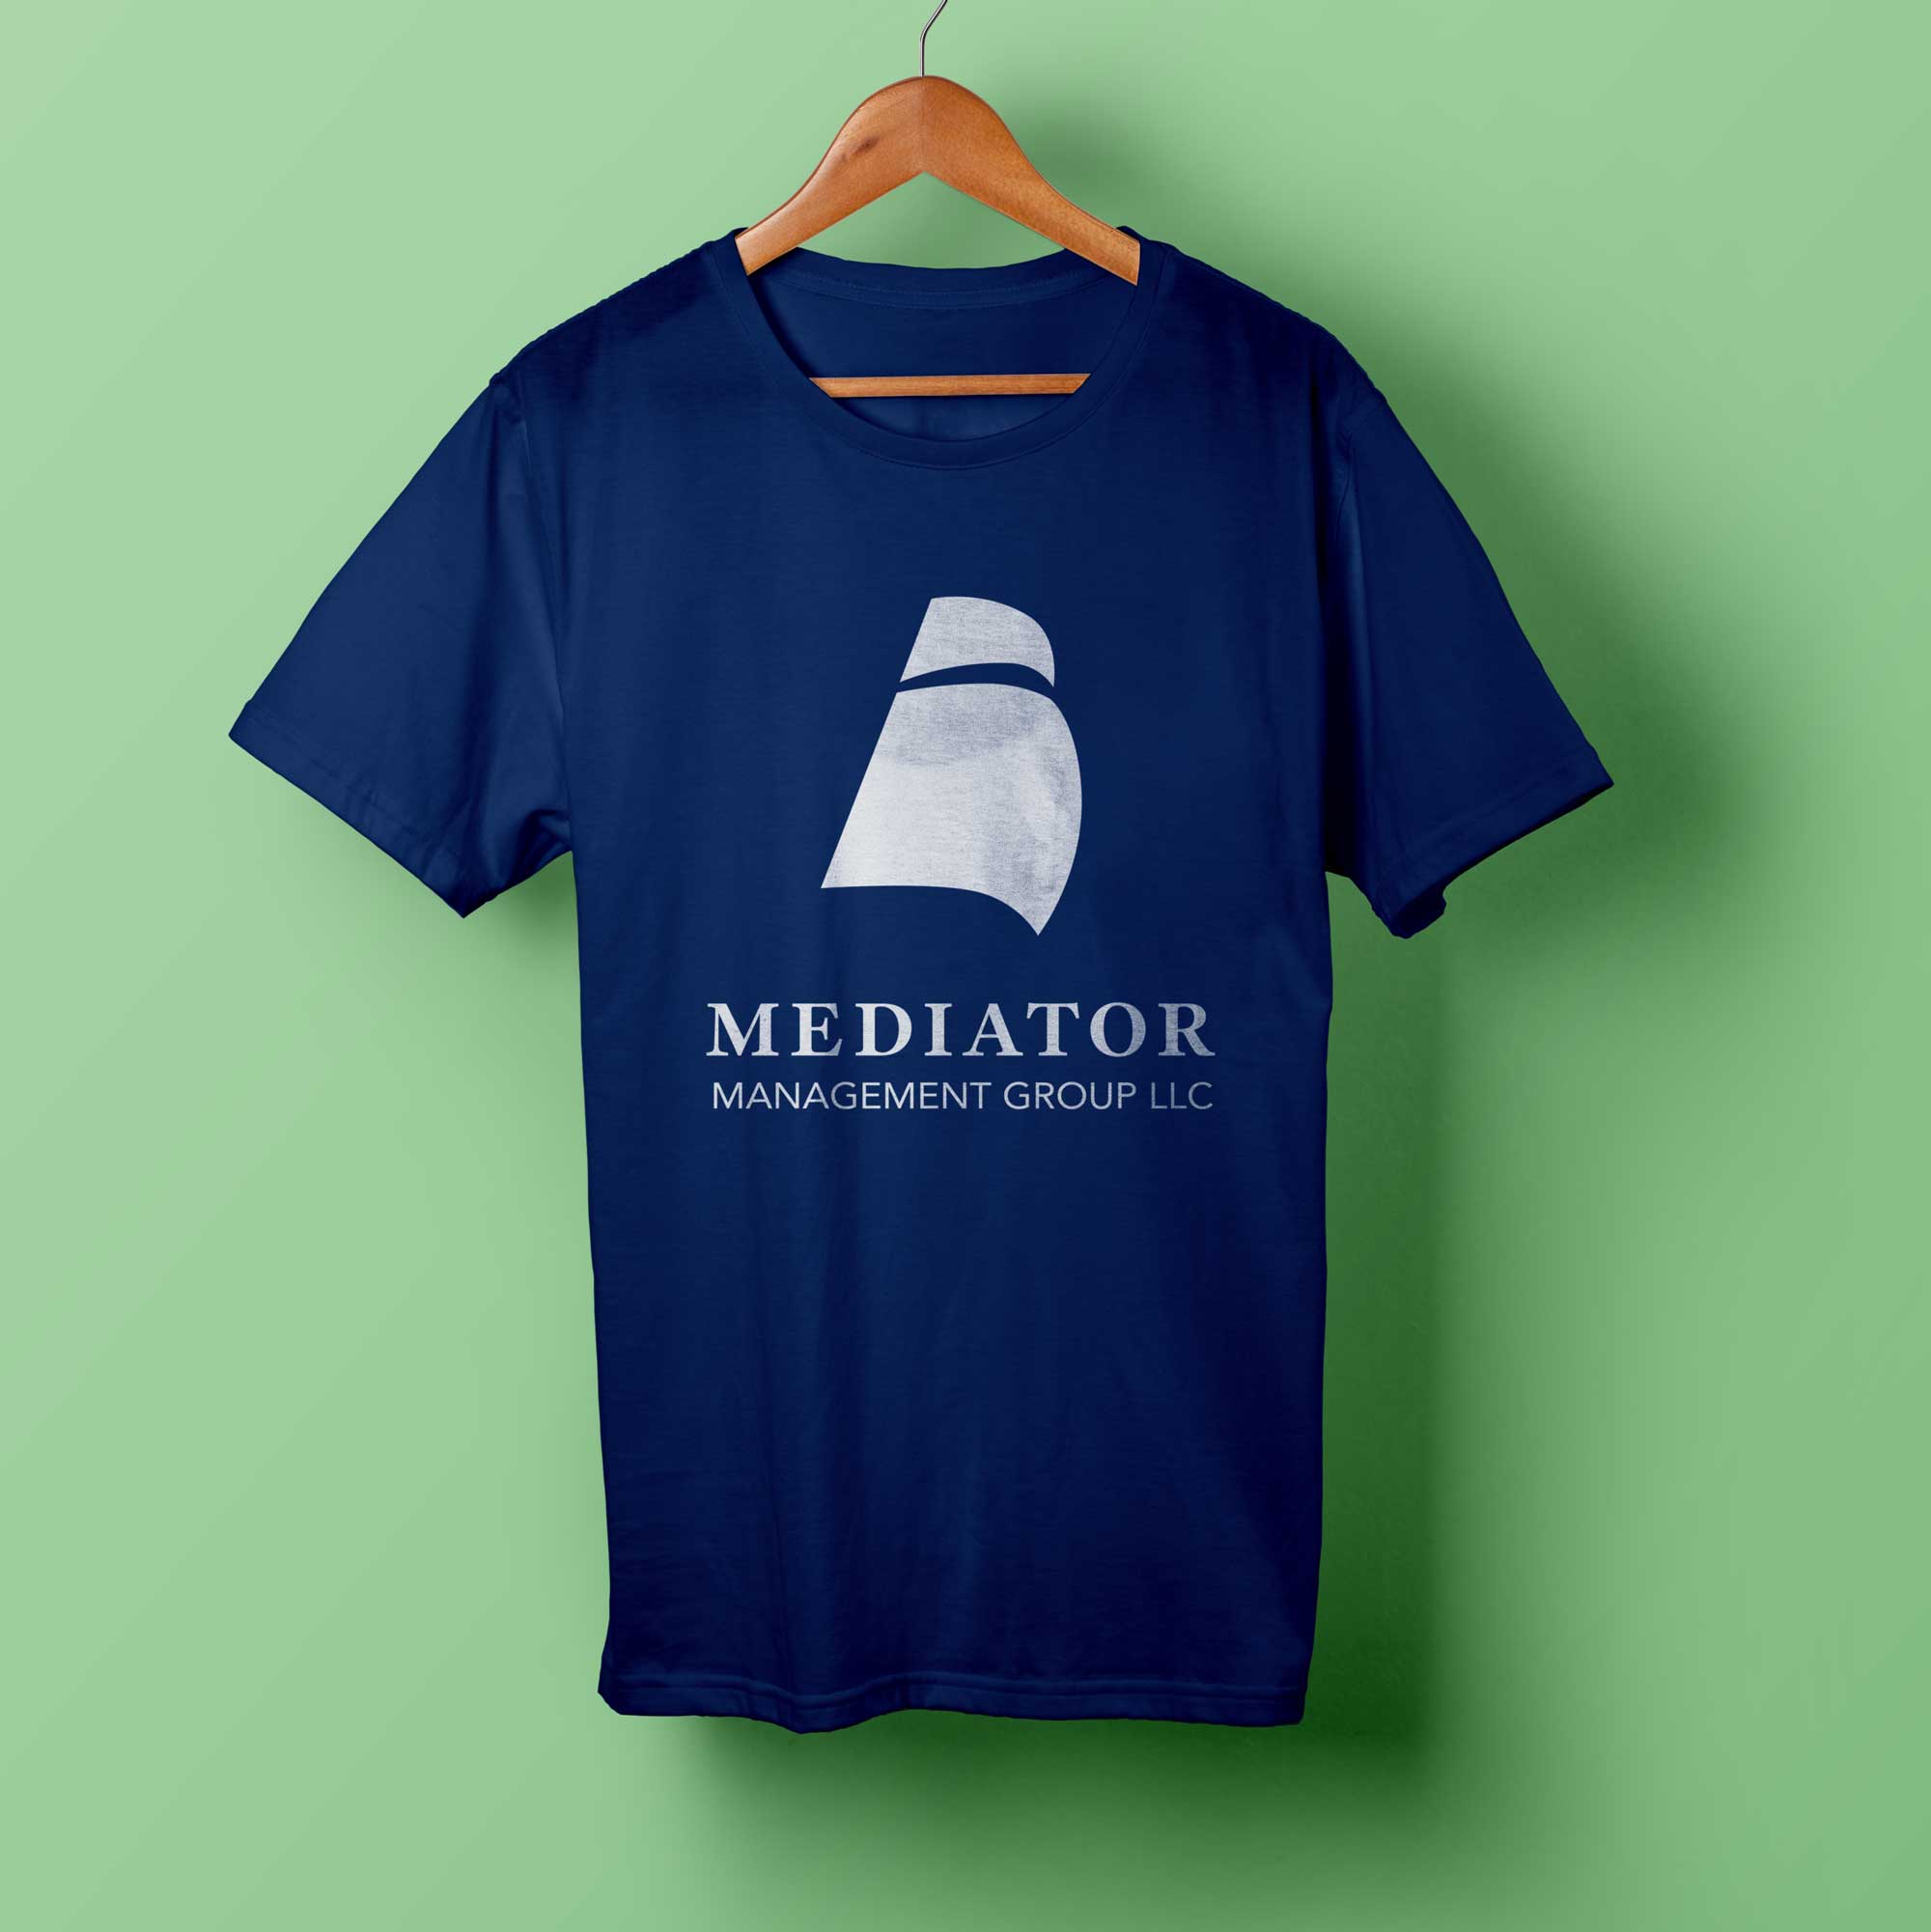 Mockup of shirt with mediator logo on it